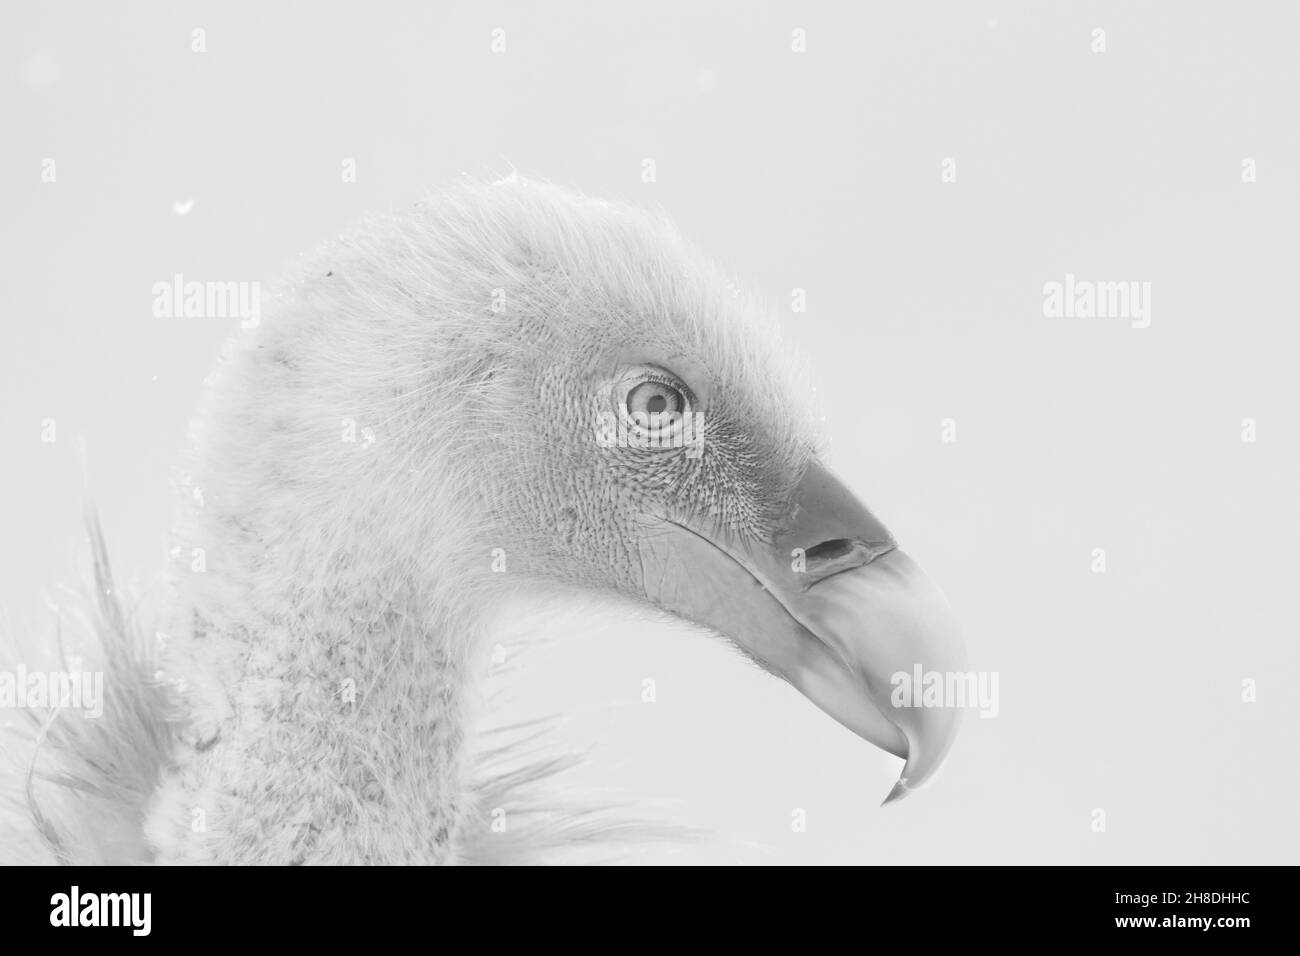 Cremenes, Castilla y Leon/Spain; Jan. 26, 2018. Black and white portrait of a griffon vulture in the snow. Stock Photo